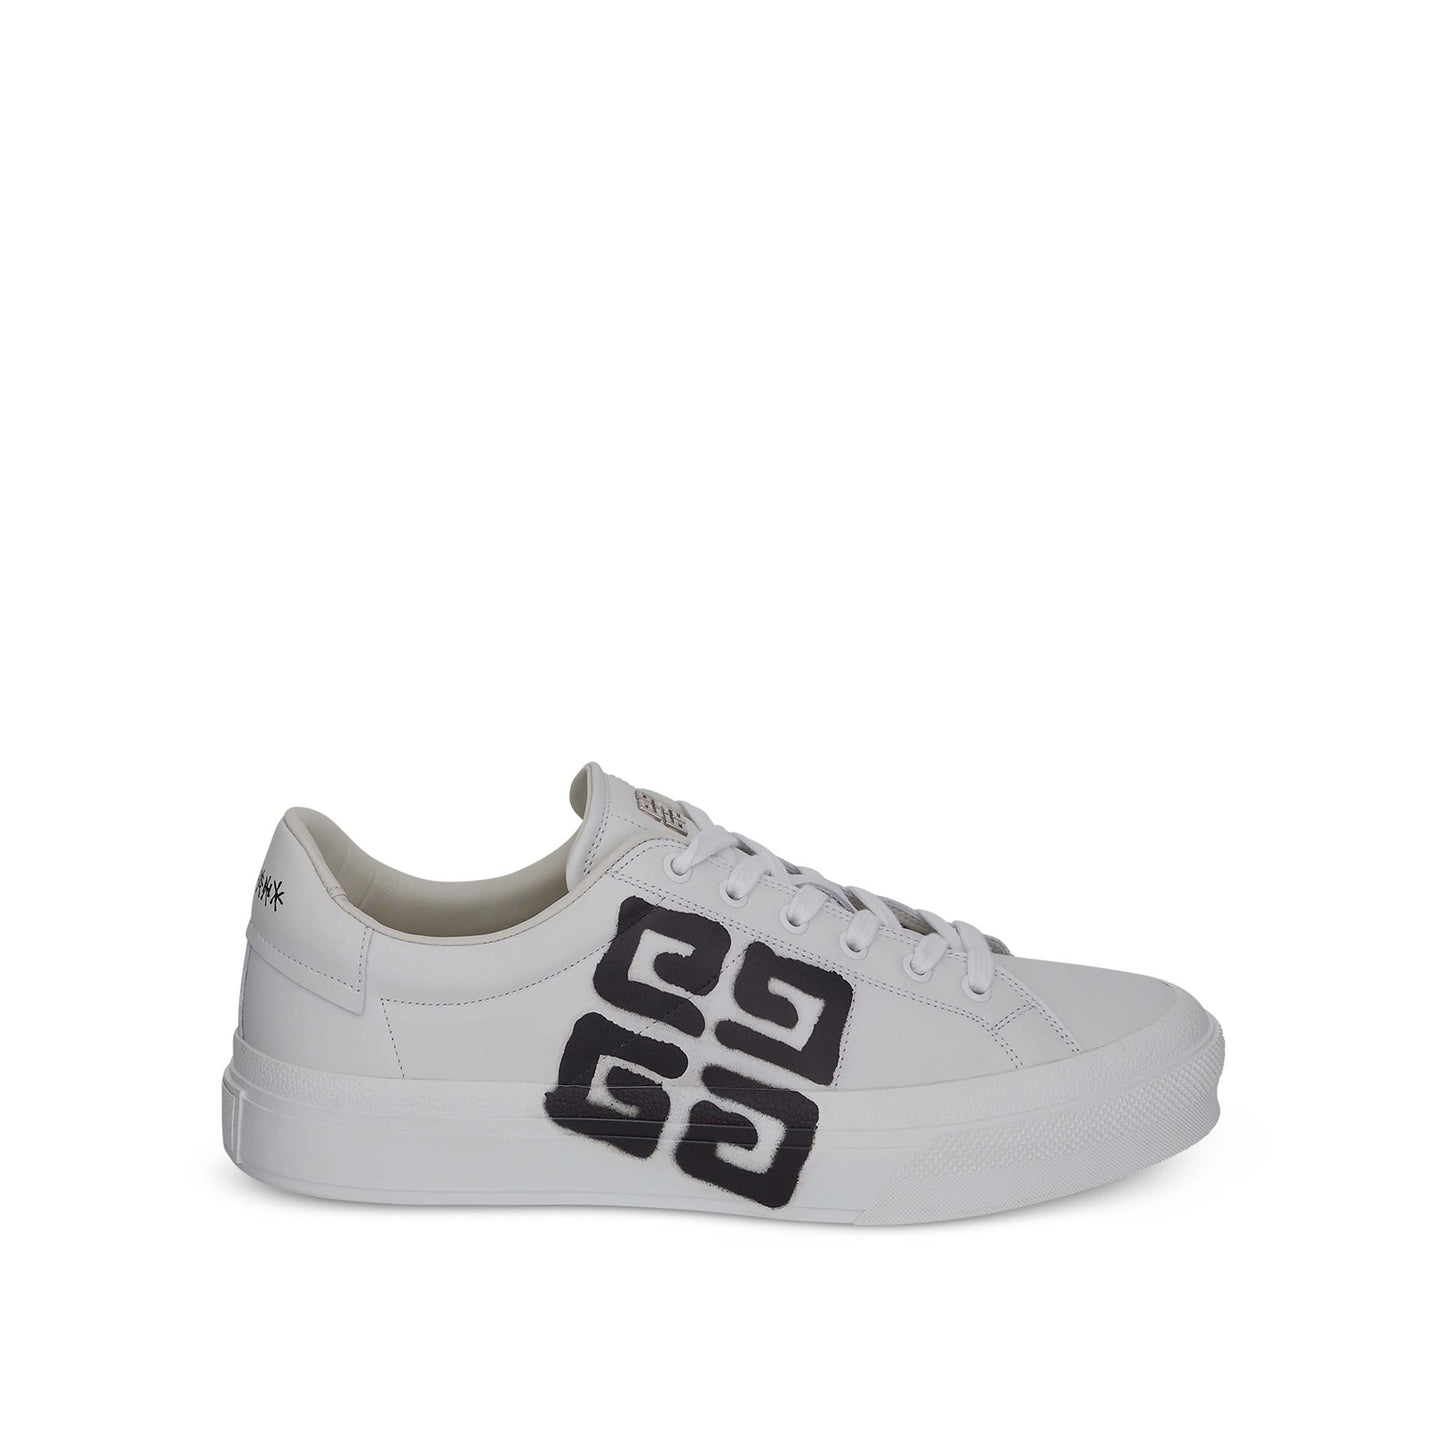 City Sport Sneaker with 4G Spray Print in White/Black